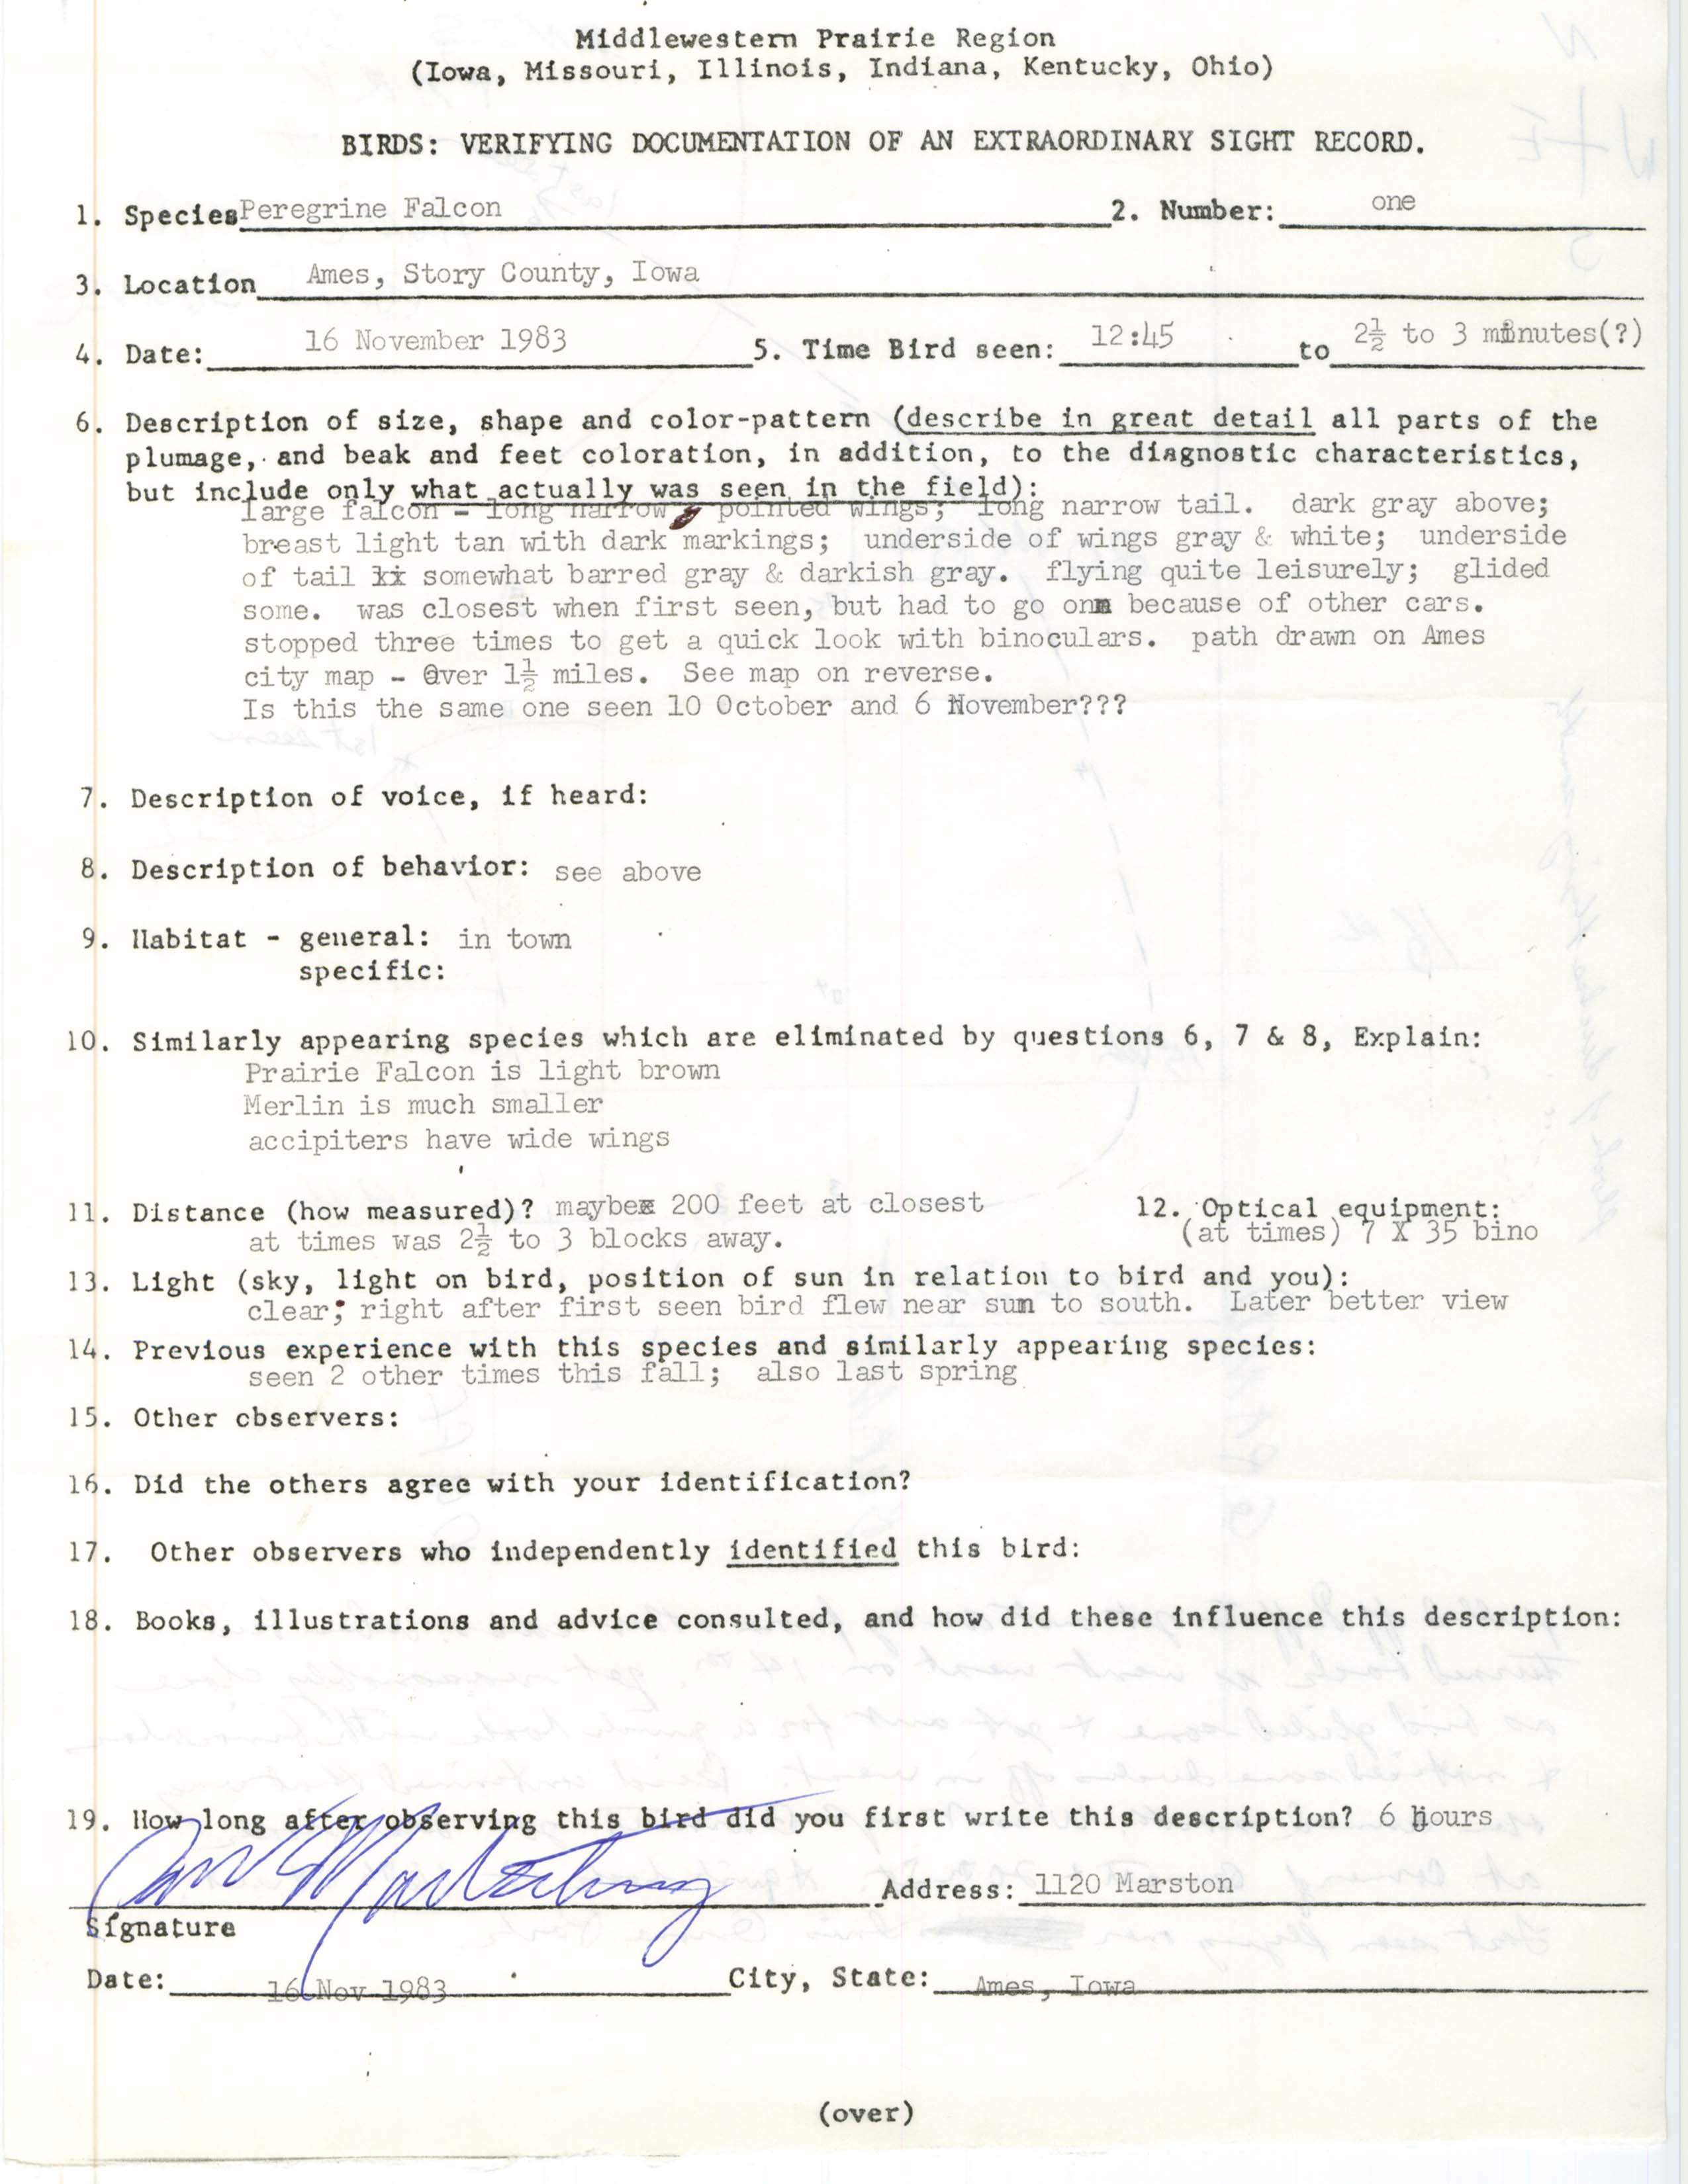 Rare bird documentation form for Peregrine Falcon at Ames, 1983